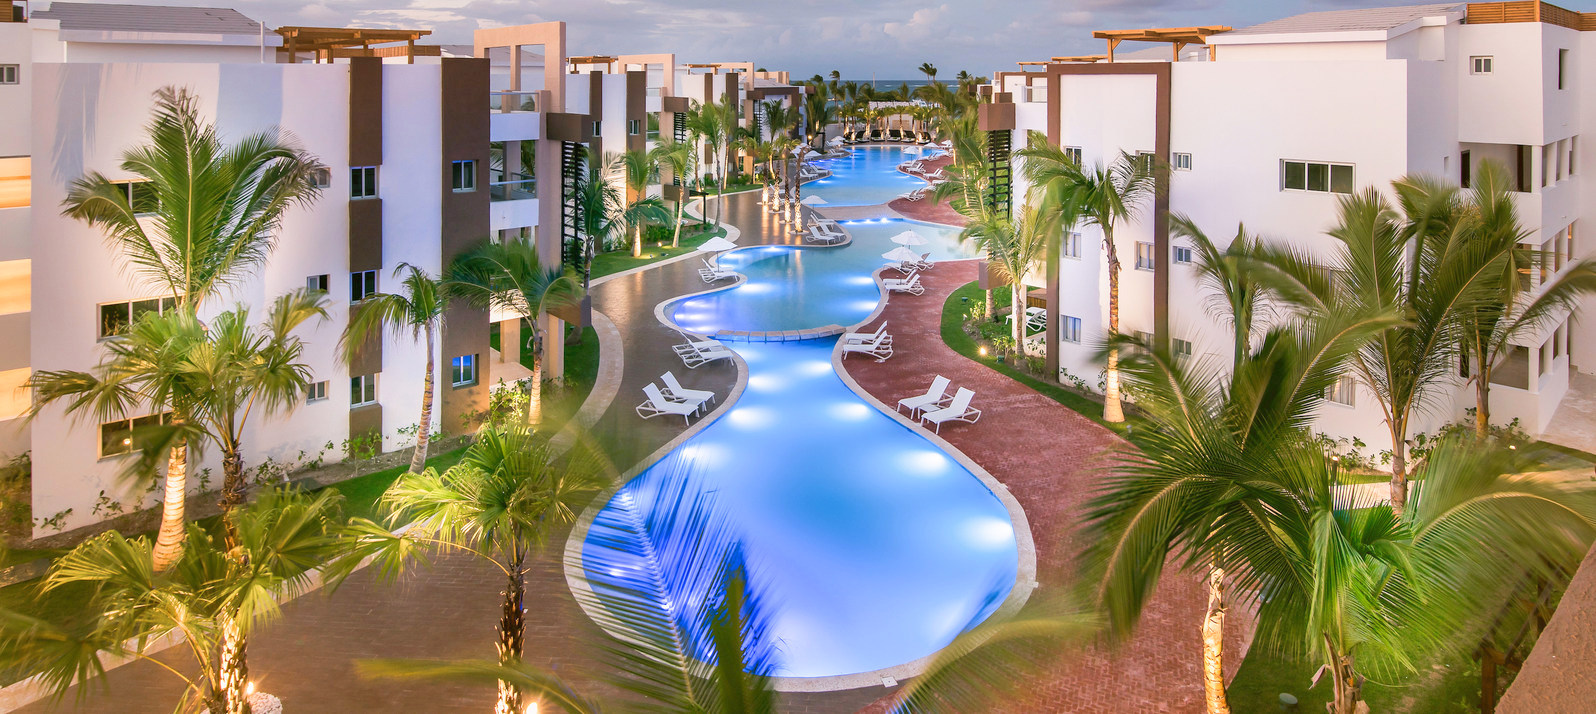 Blue Beach Punta Cana Luxury Resort ofrece coctel a agentes de viajes